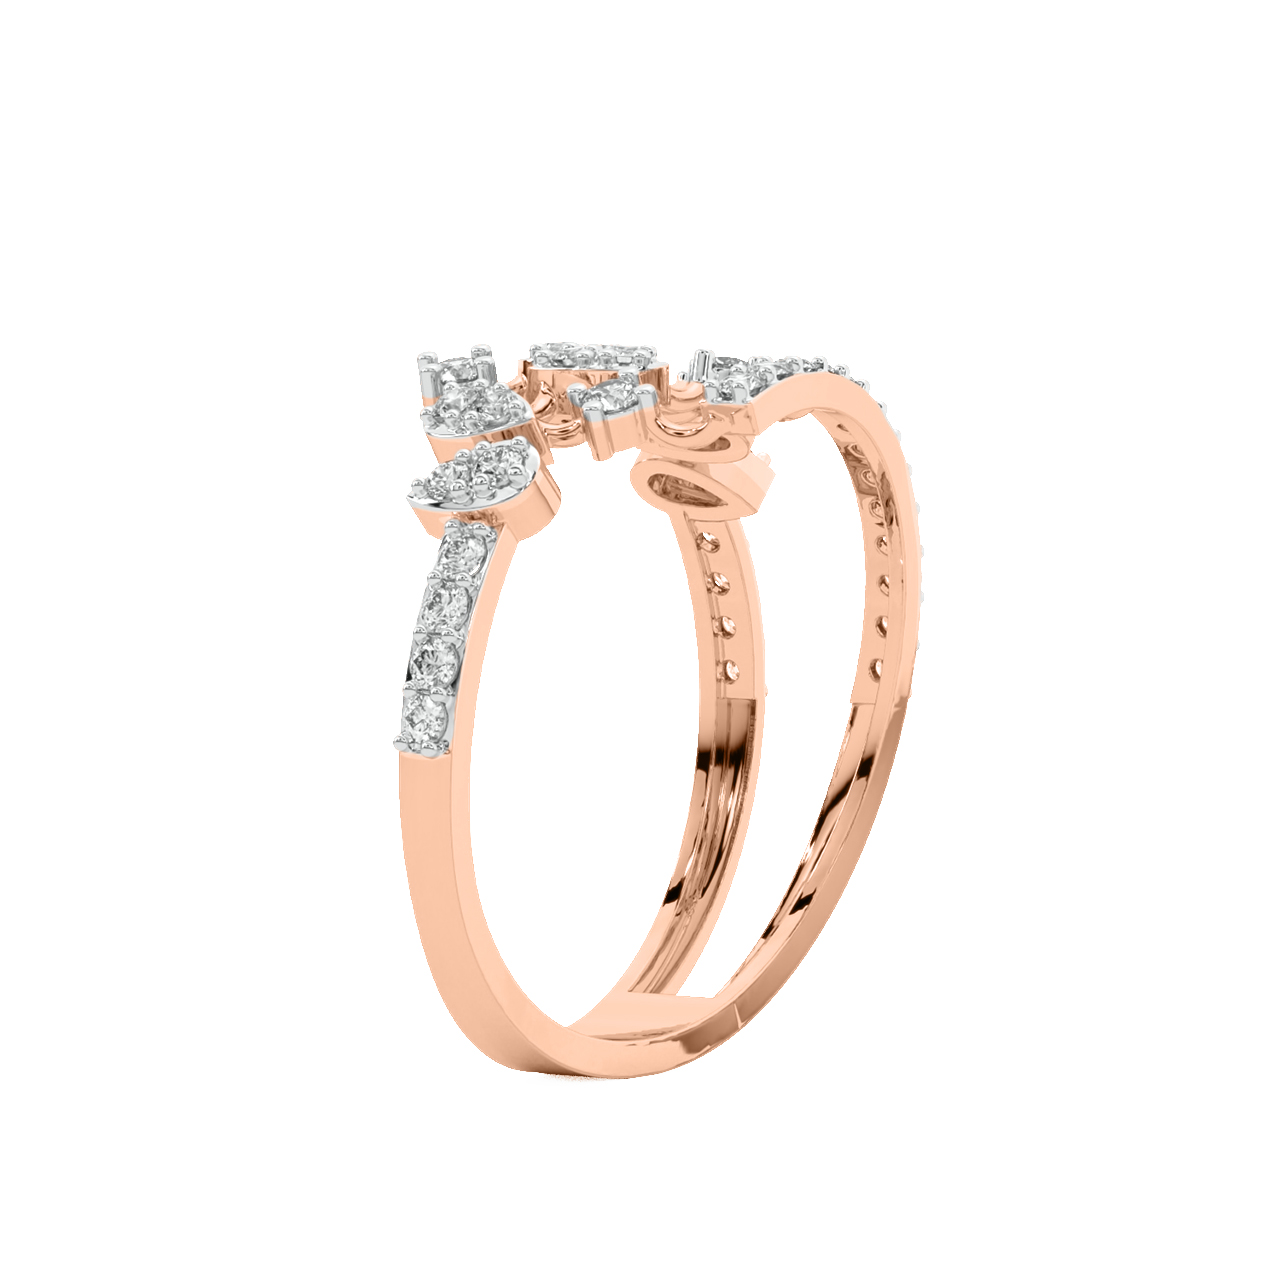 William Diamond Stackable Ring